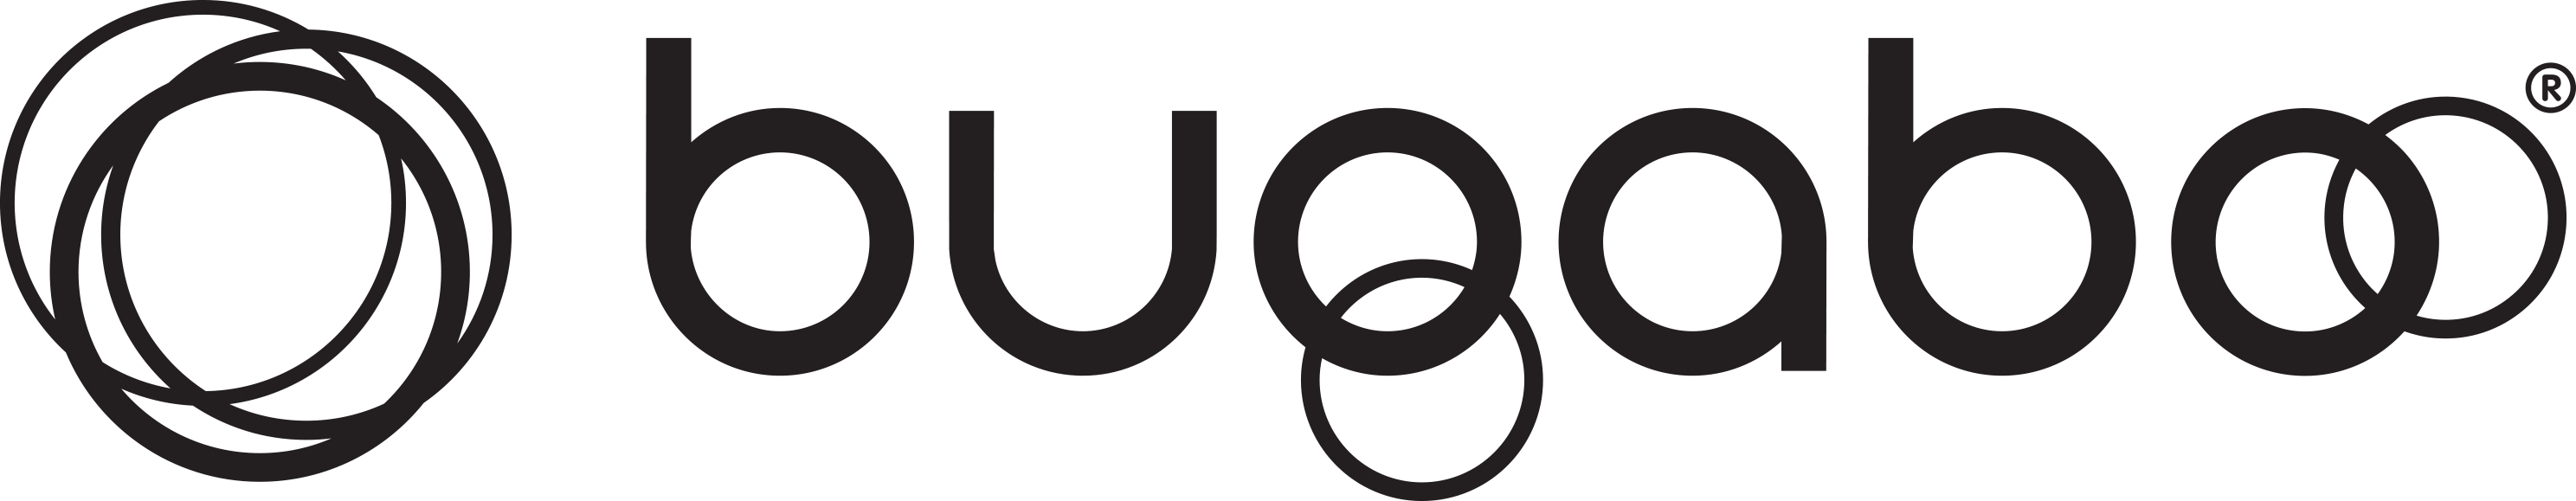 Bugaboo-Logo